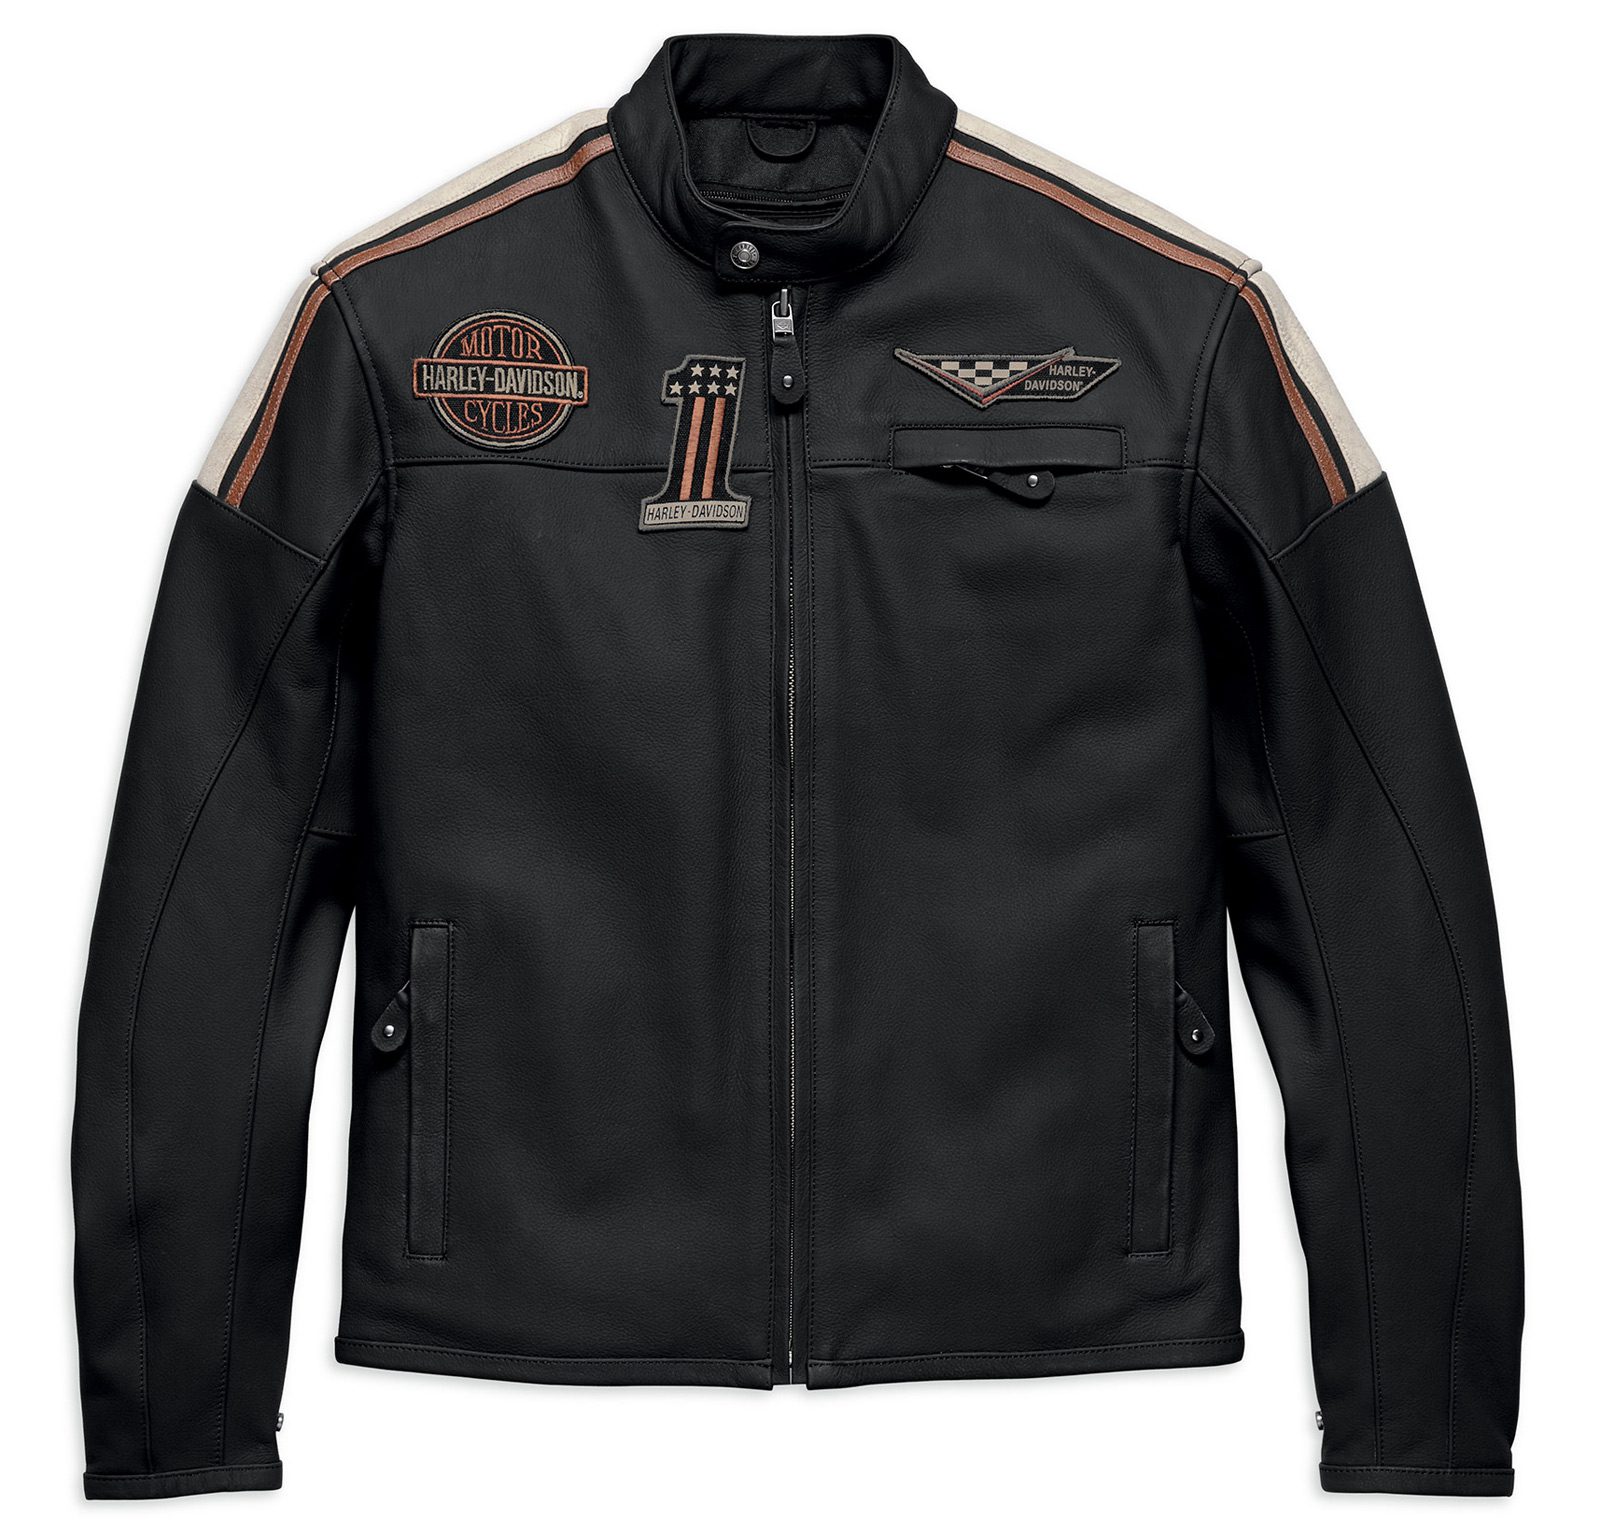 Gorgan Ce Leather Jacket